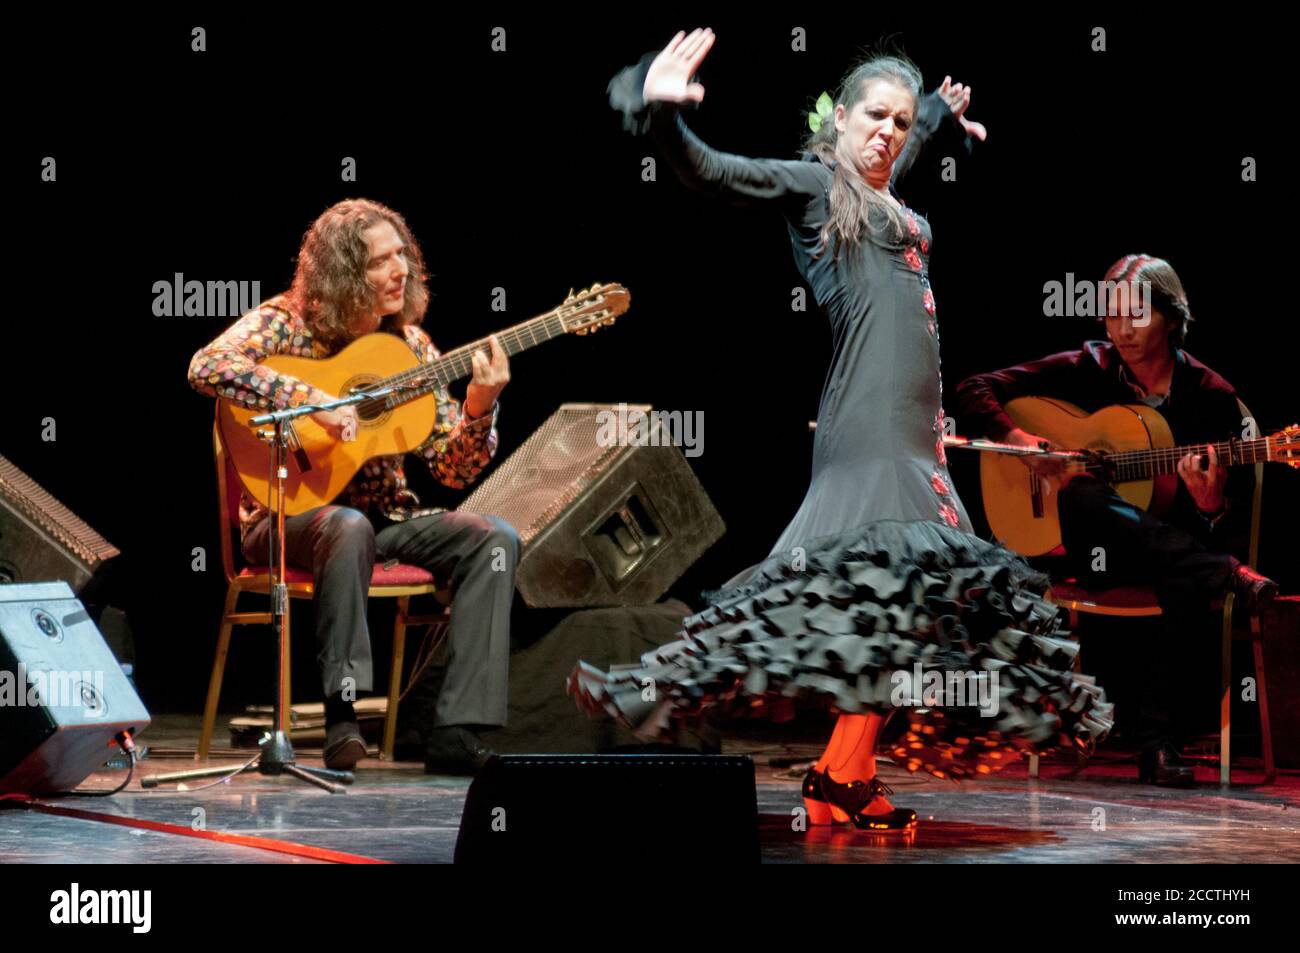 flamenco music